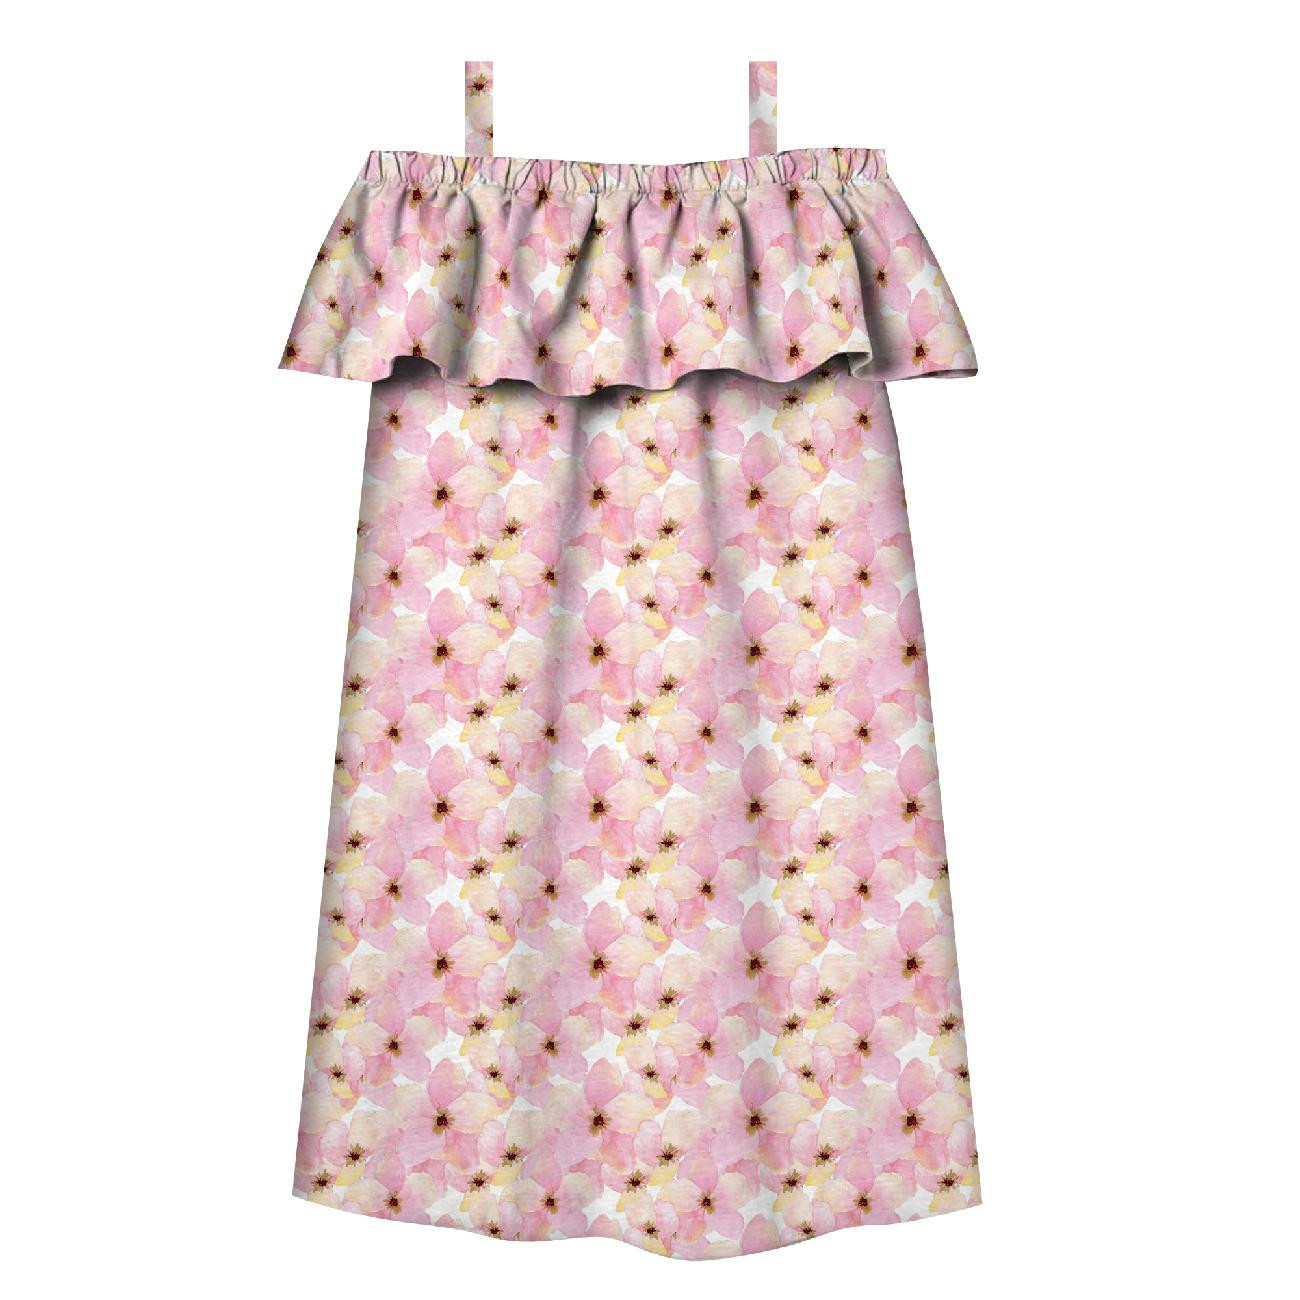 Bardot neckline dress (LILI) - PINK FLOWERS (IN THE MEADOW) - sewing set